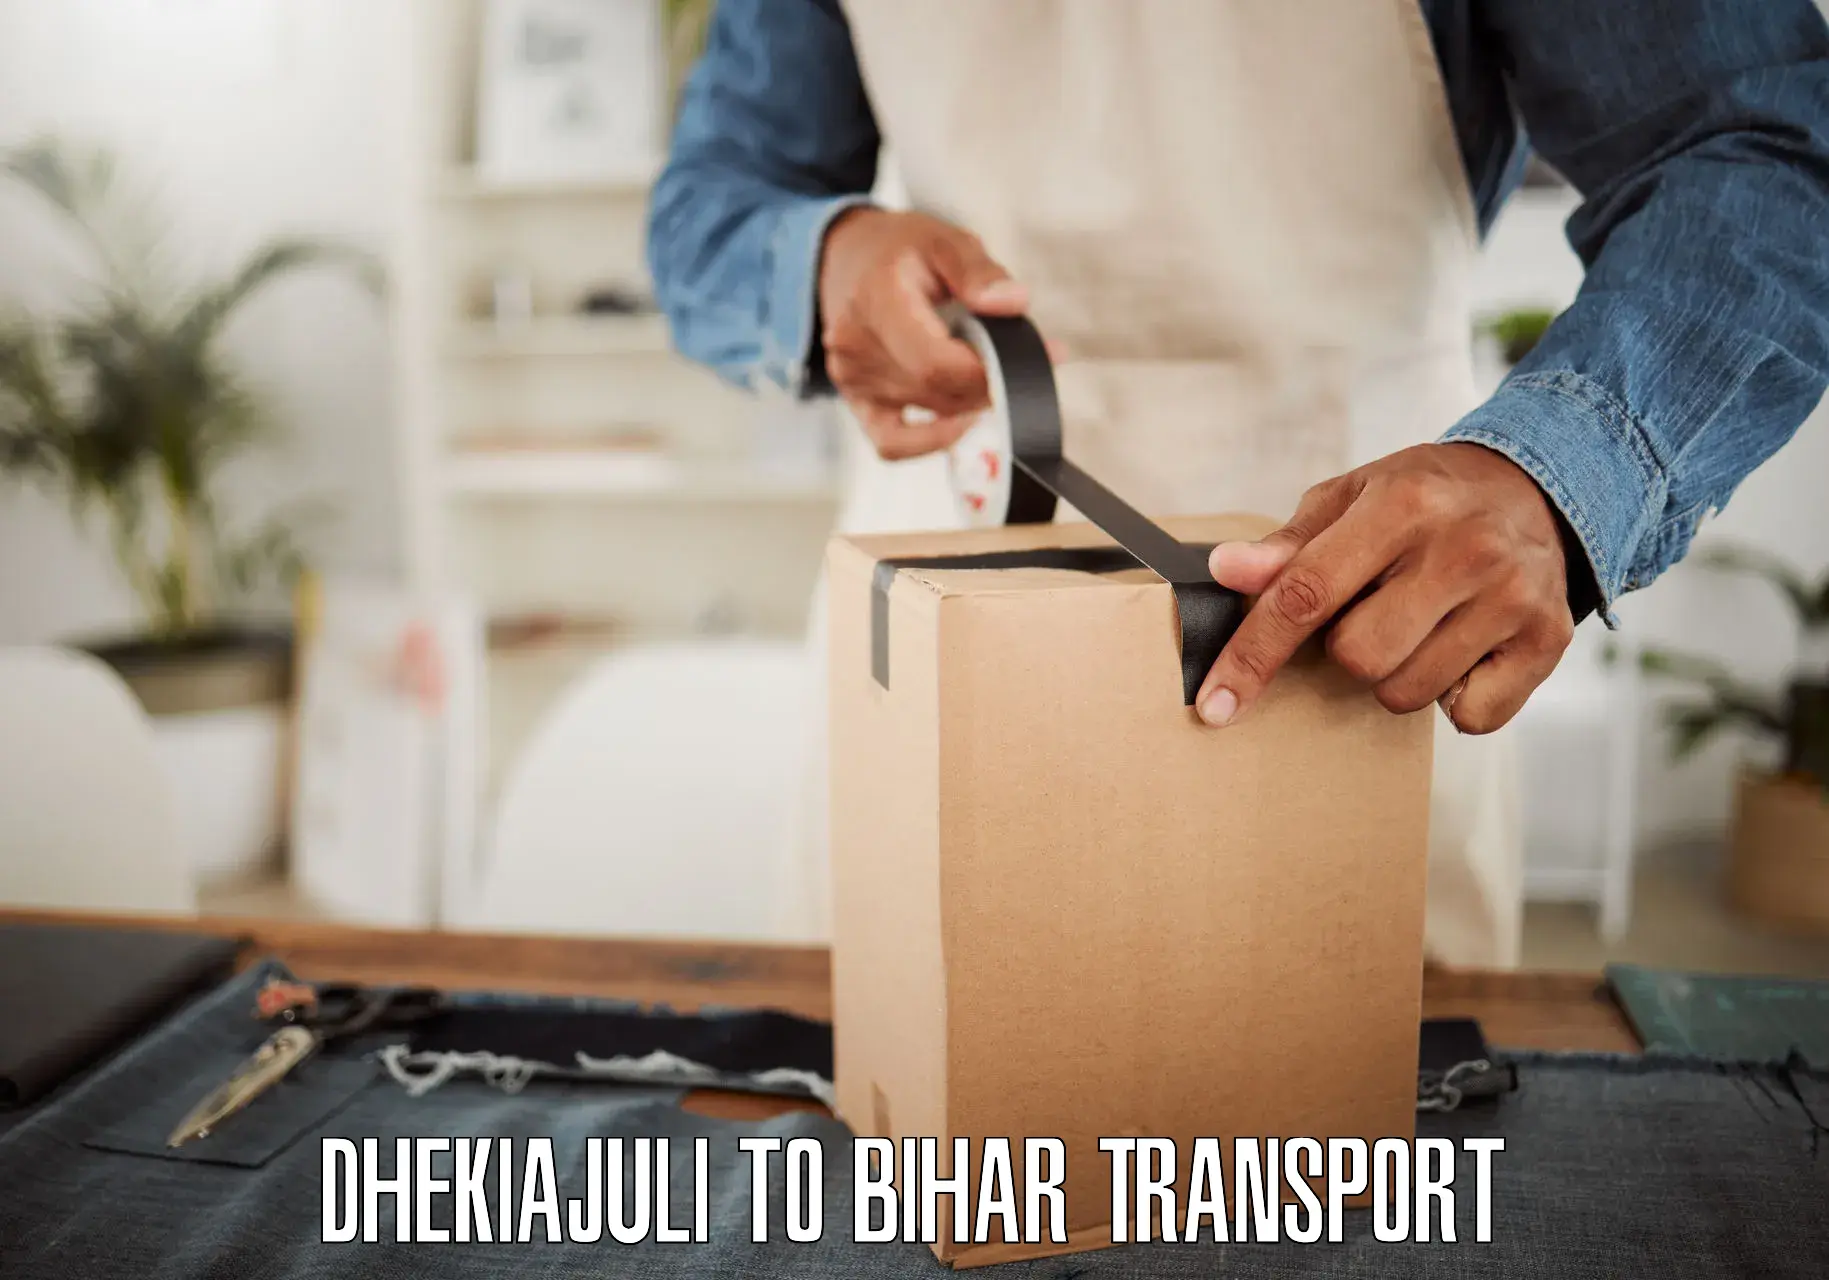 Transport in sharing Dhekiajuli to Madhepura